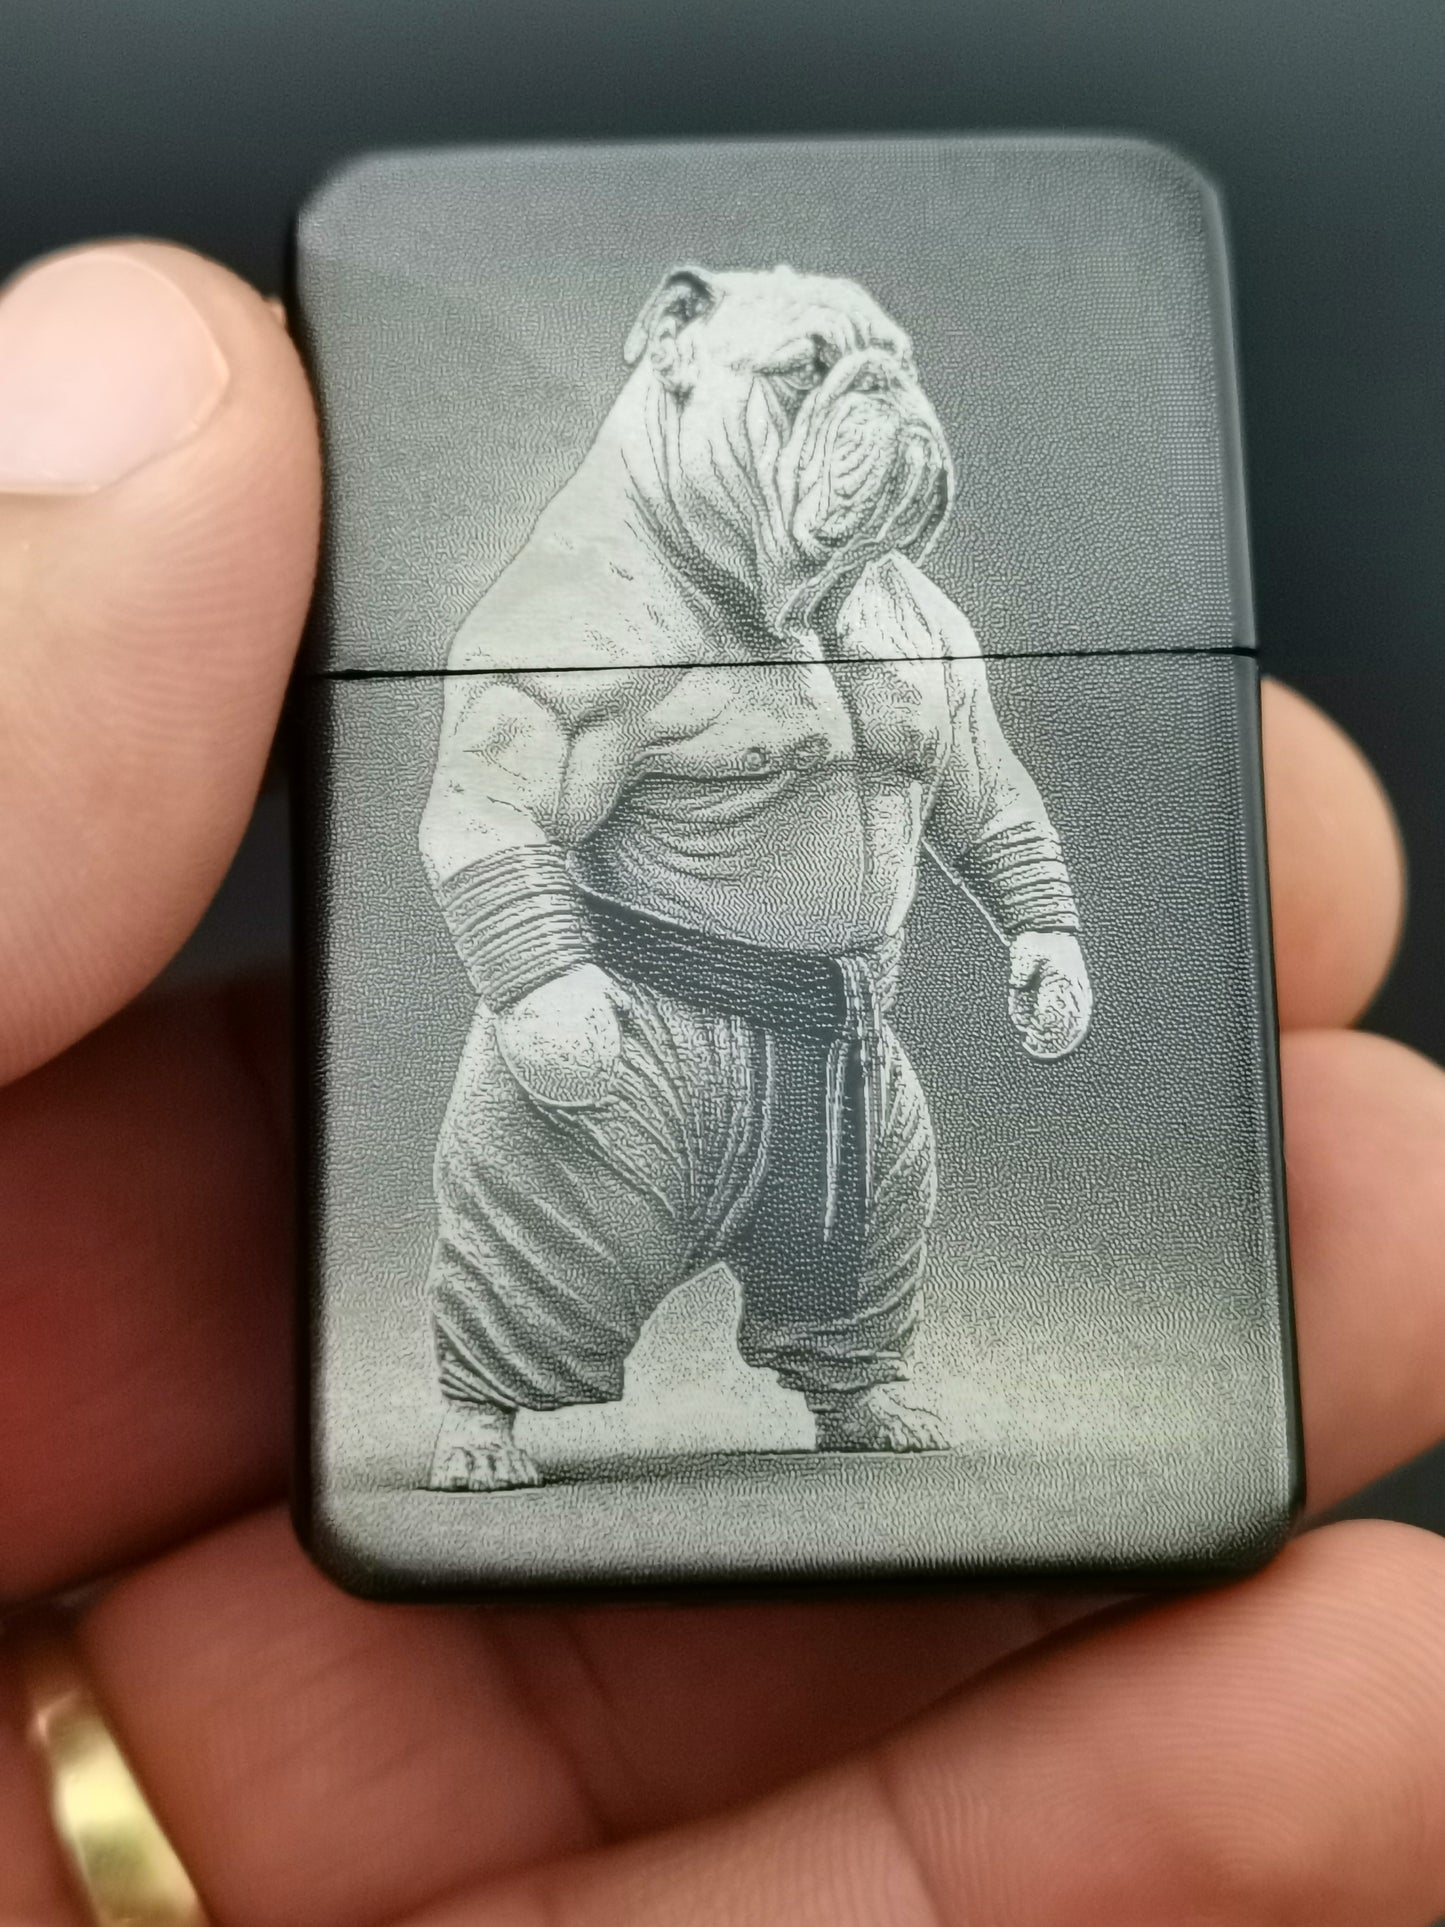 Personalised Engraved Karate Bulldog Windproof Oil Lighter